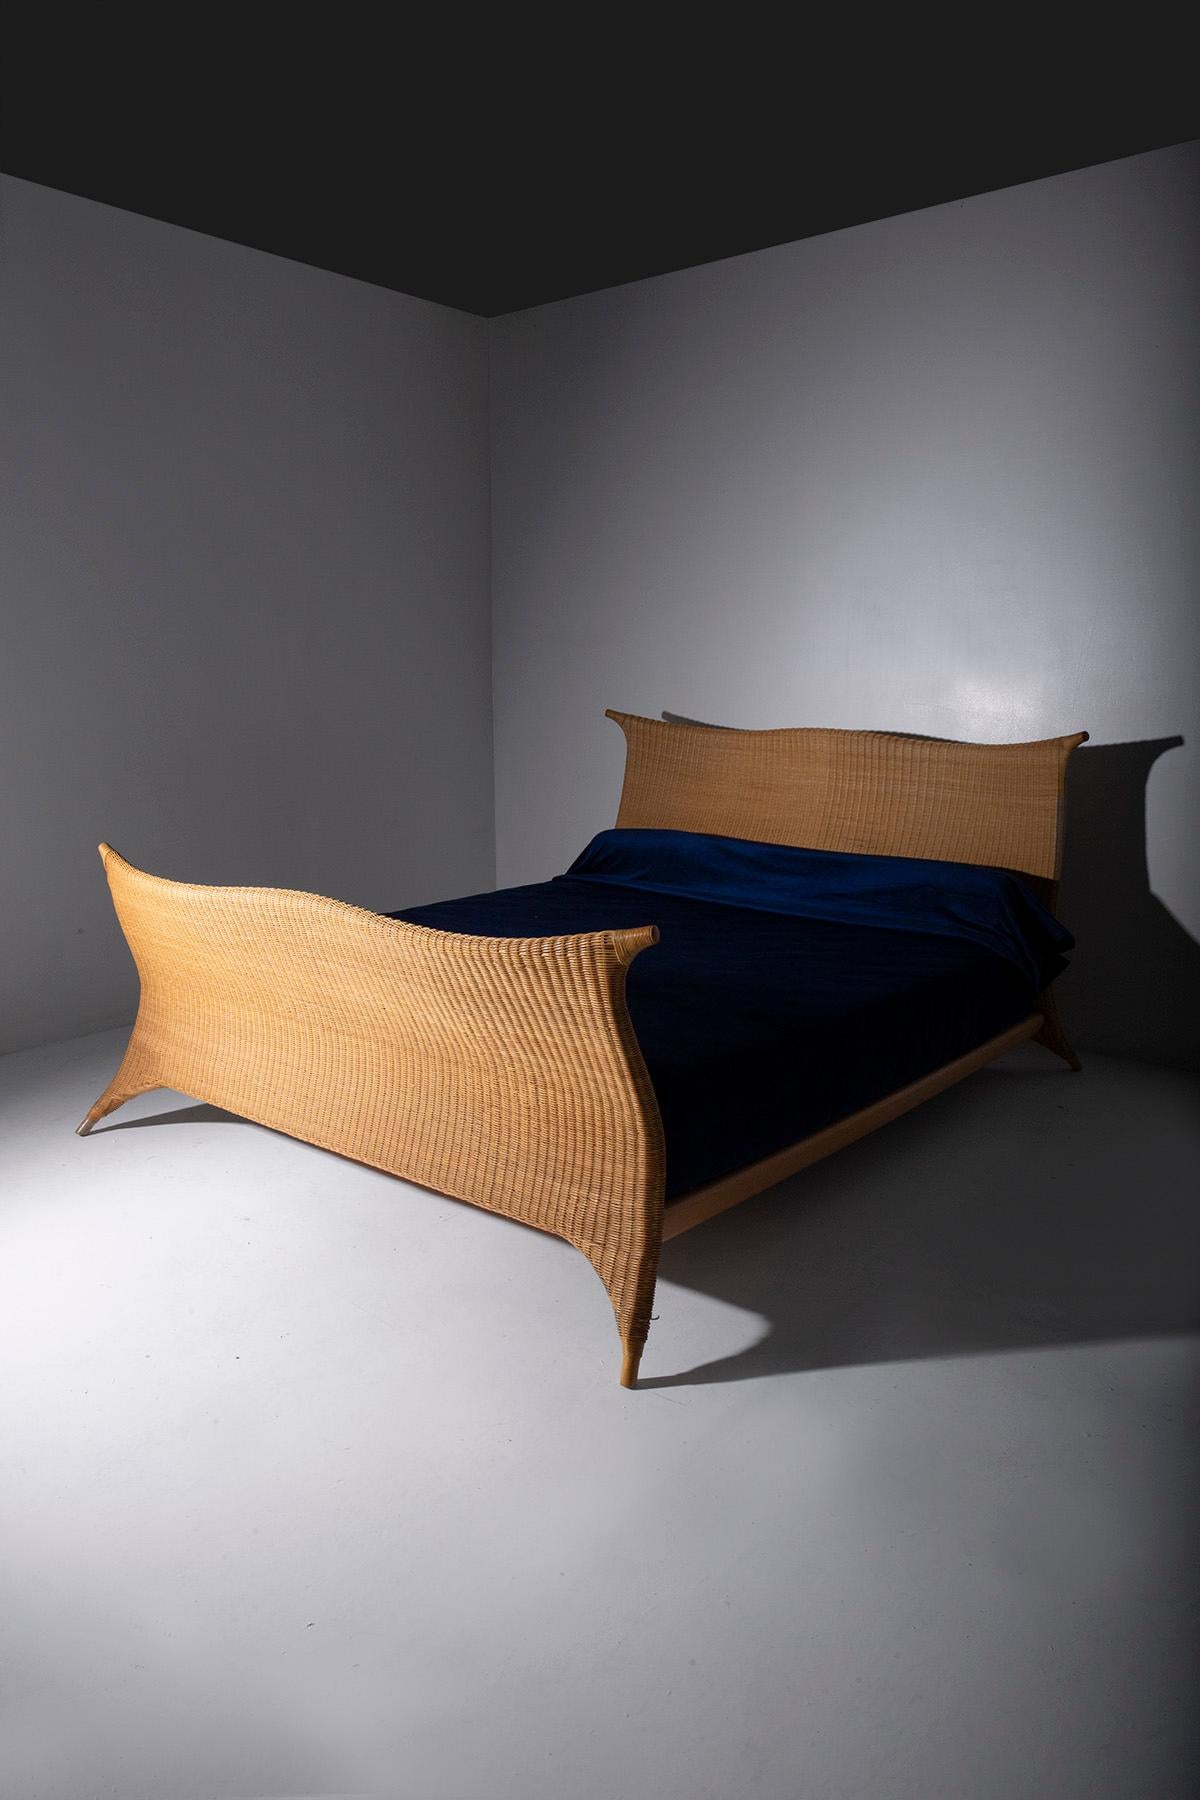 Late 20th Century Italian rattan bed by PierAntonio Bonacina, with label